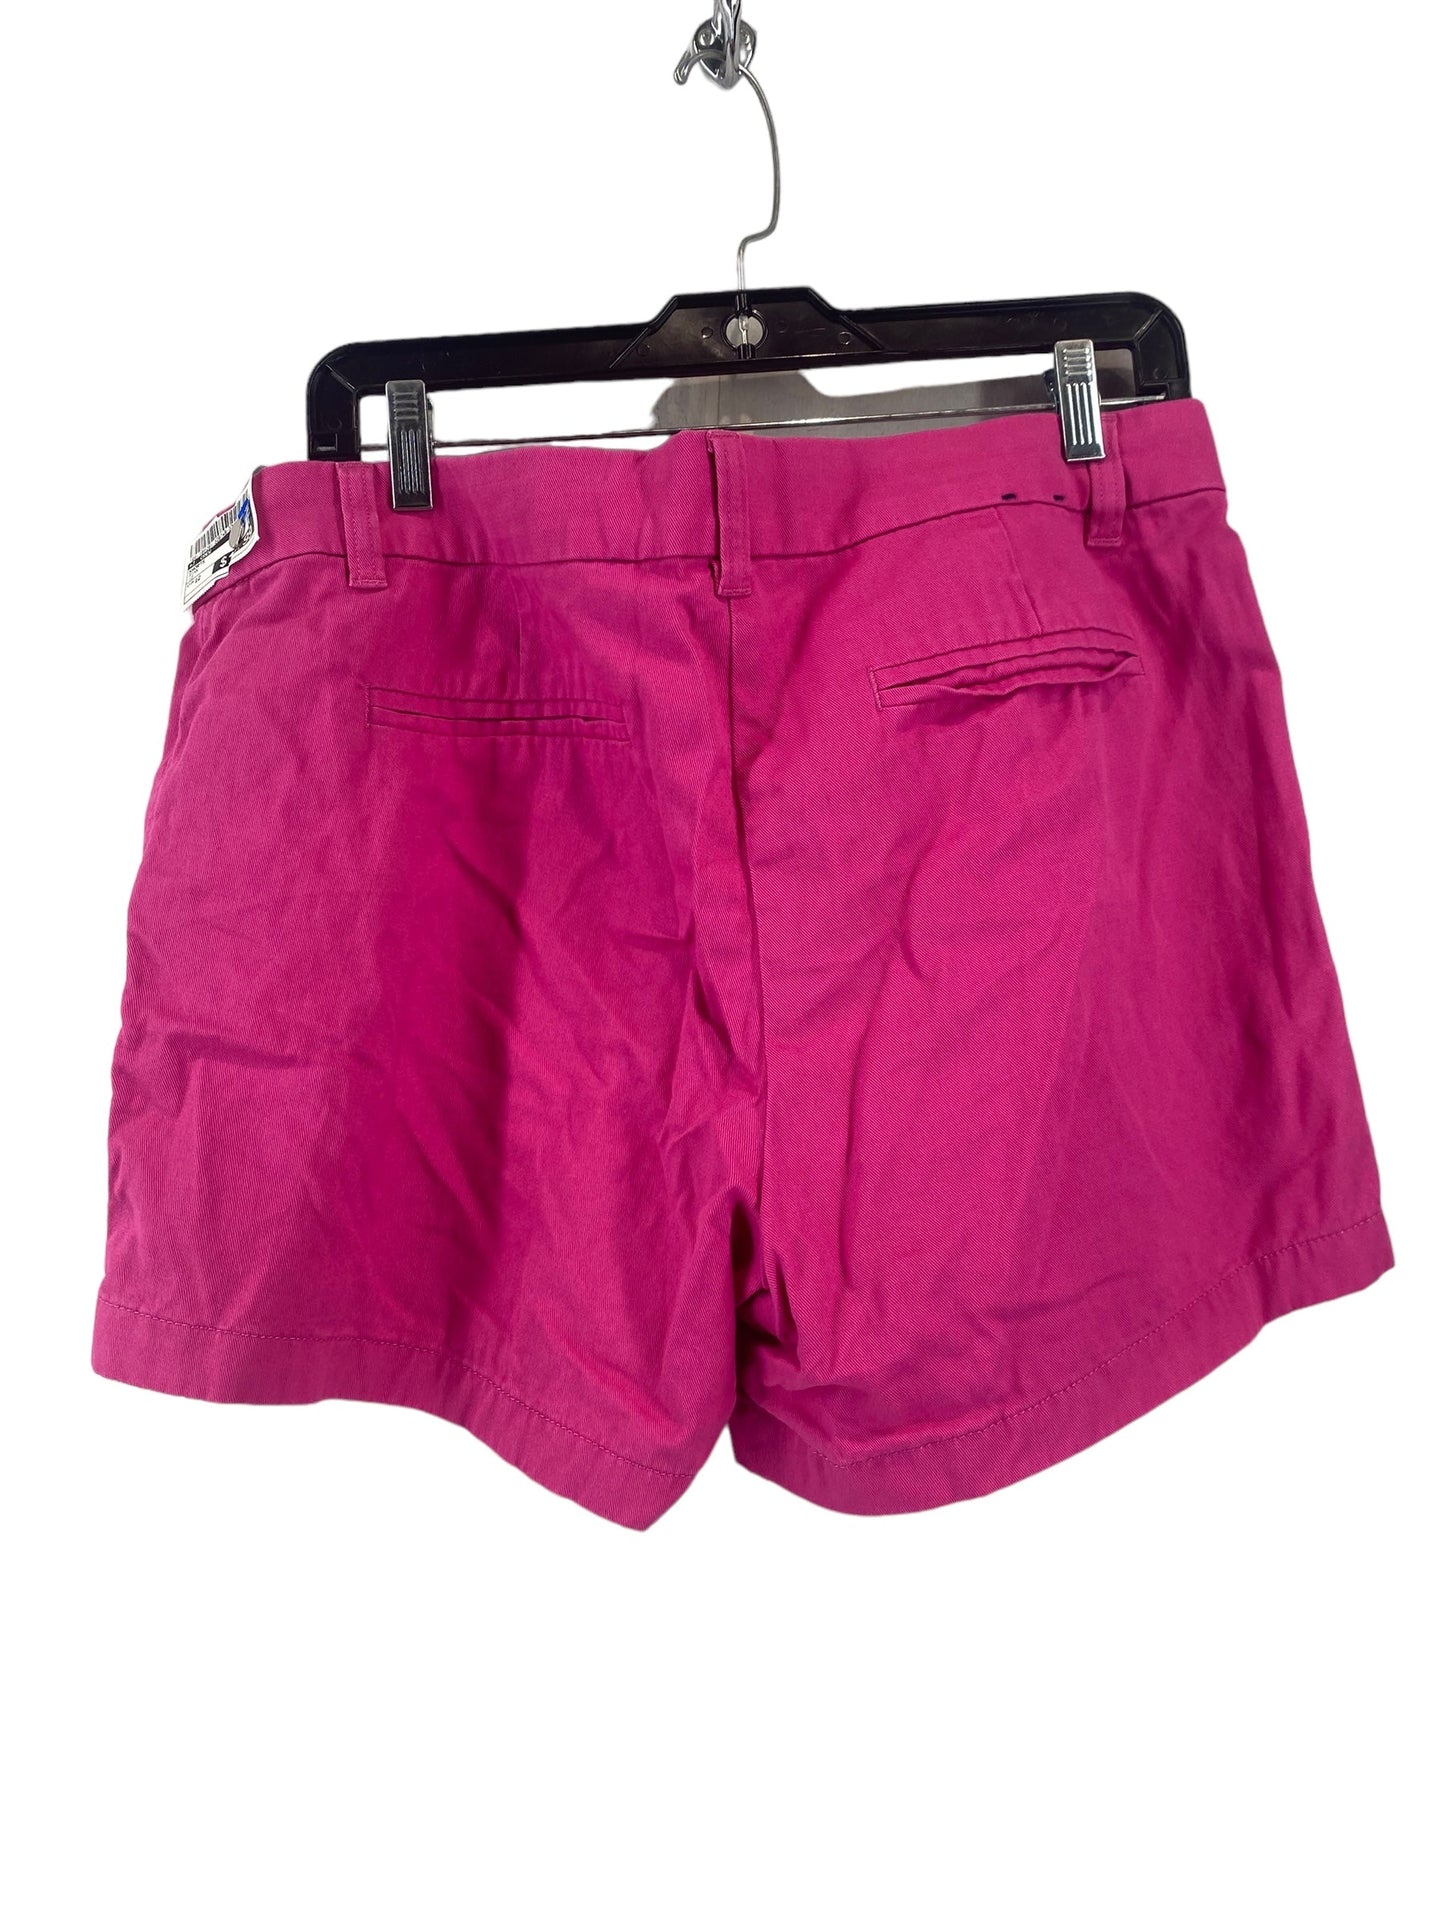 Pink Shorts J. Crew, Size 12